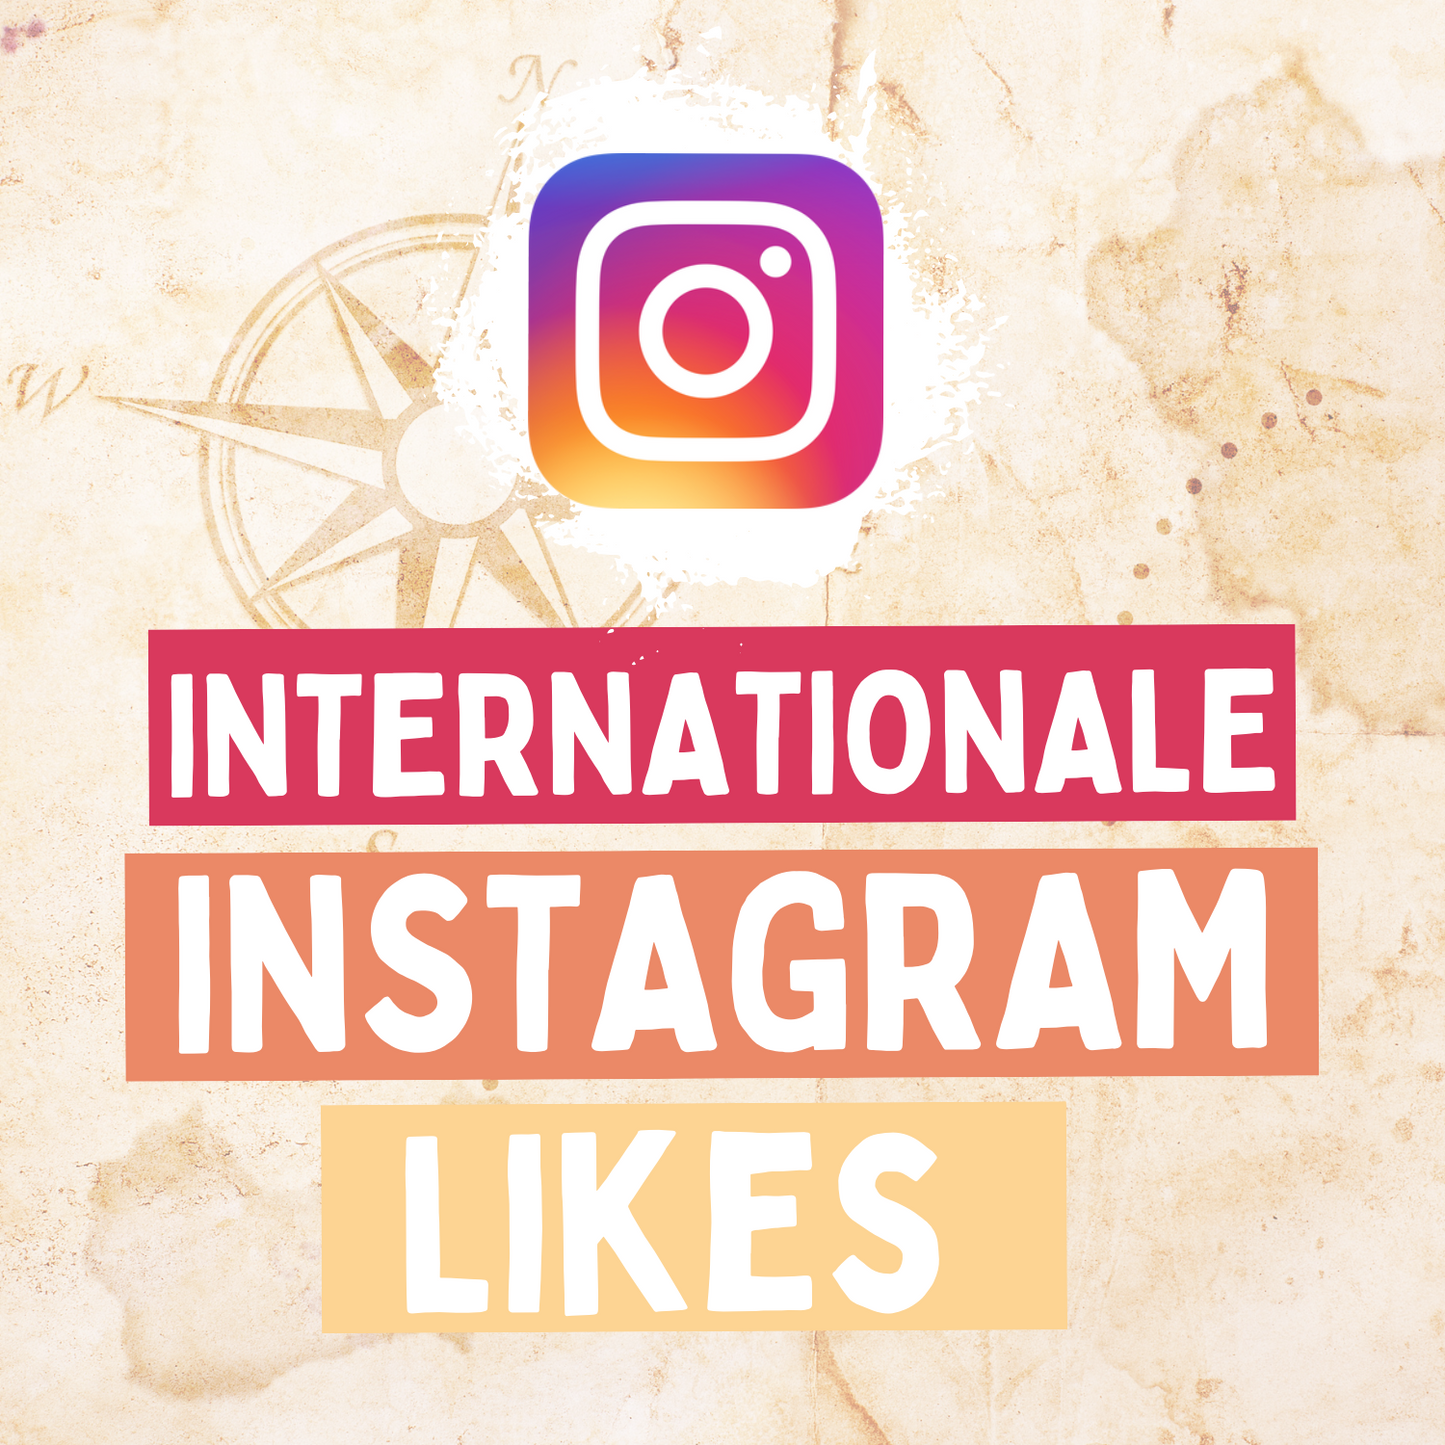 Internationale Instagram Likes